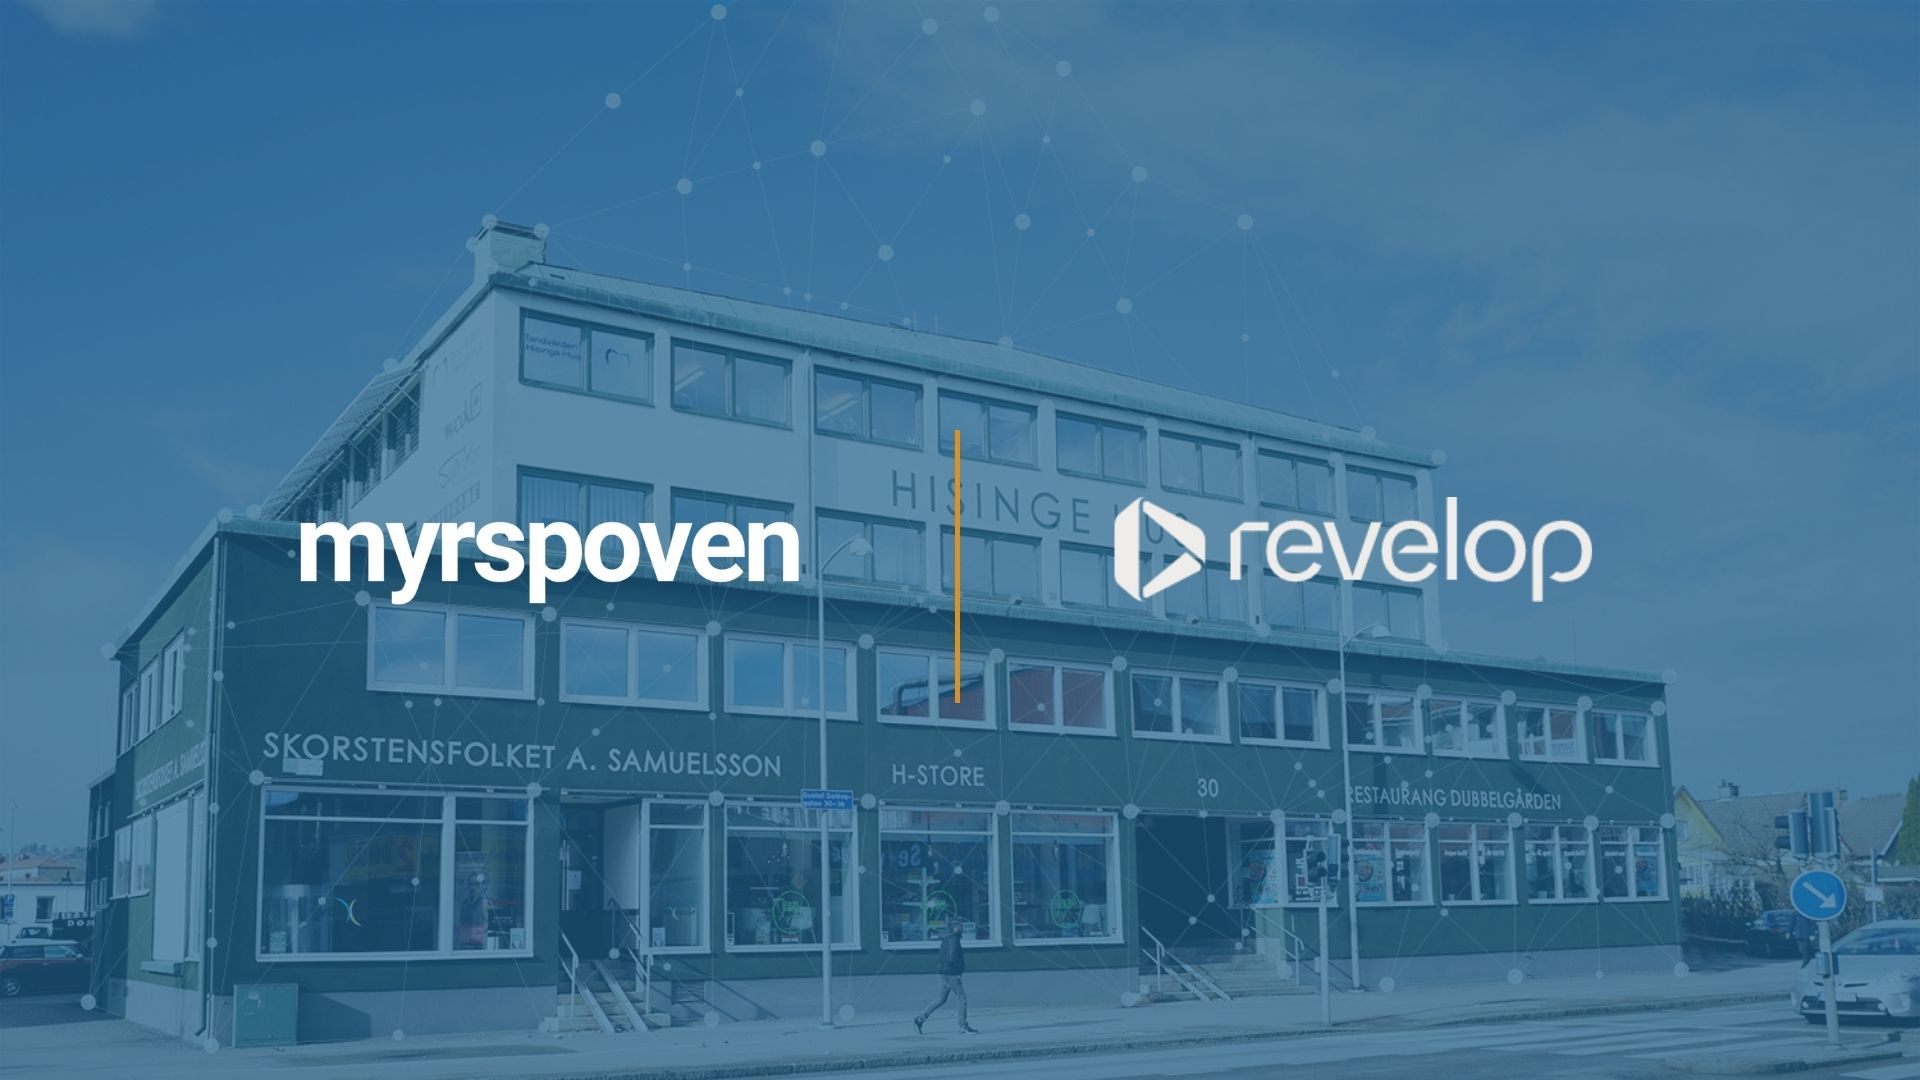 Revelop invests in Myrspoven after rewarding cooperation